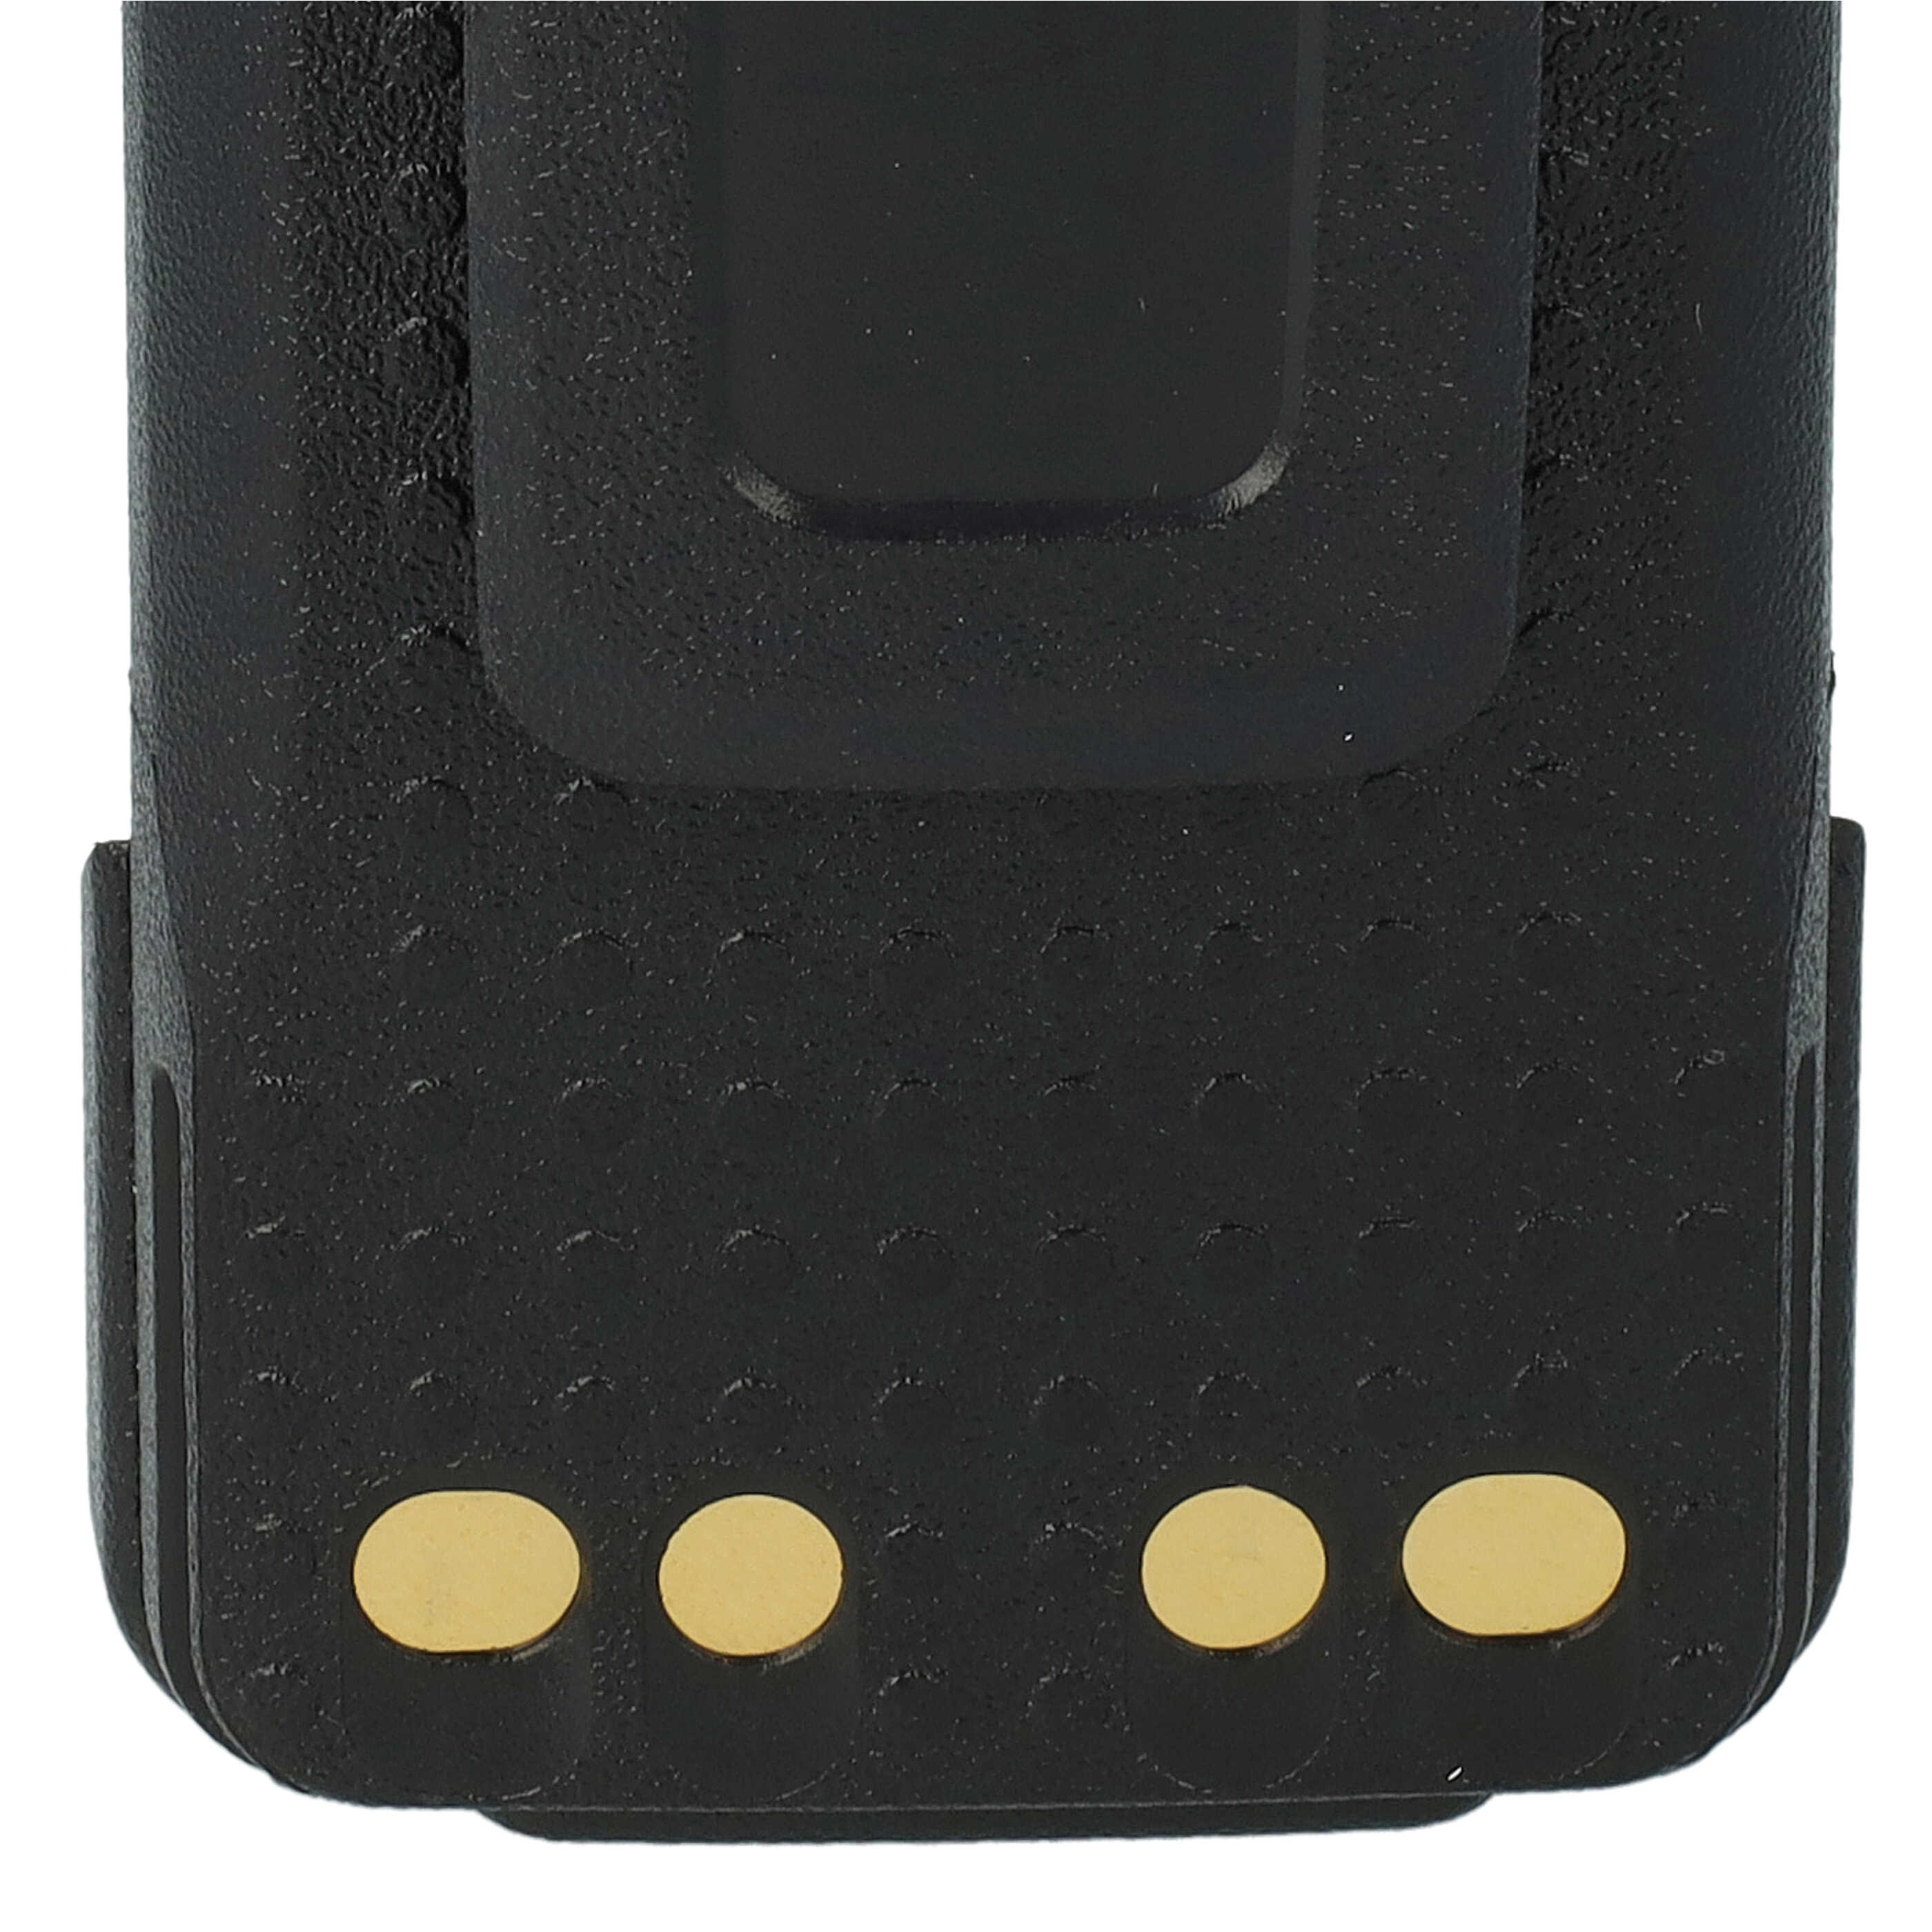 Batería reemplaza Motorola PMNN441 para radio, walkie-talkie Motorola - 3000 mAh 7,2 V Li-Ion con clip